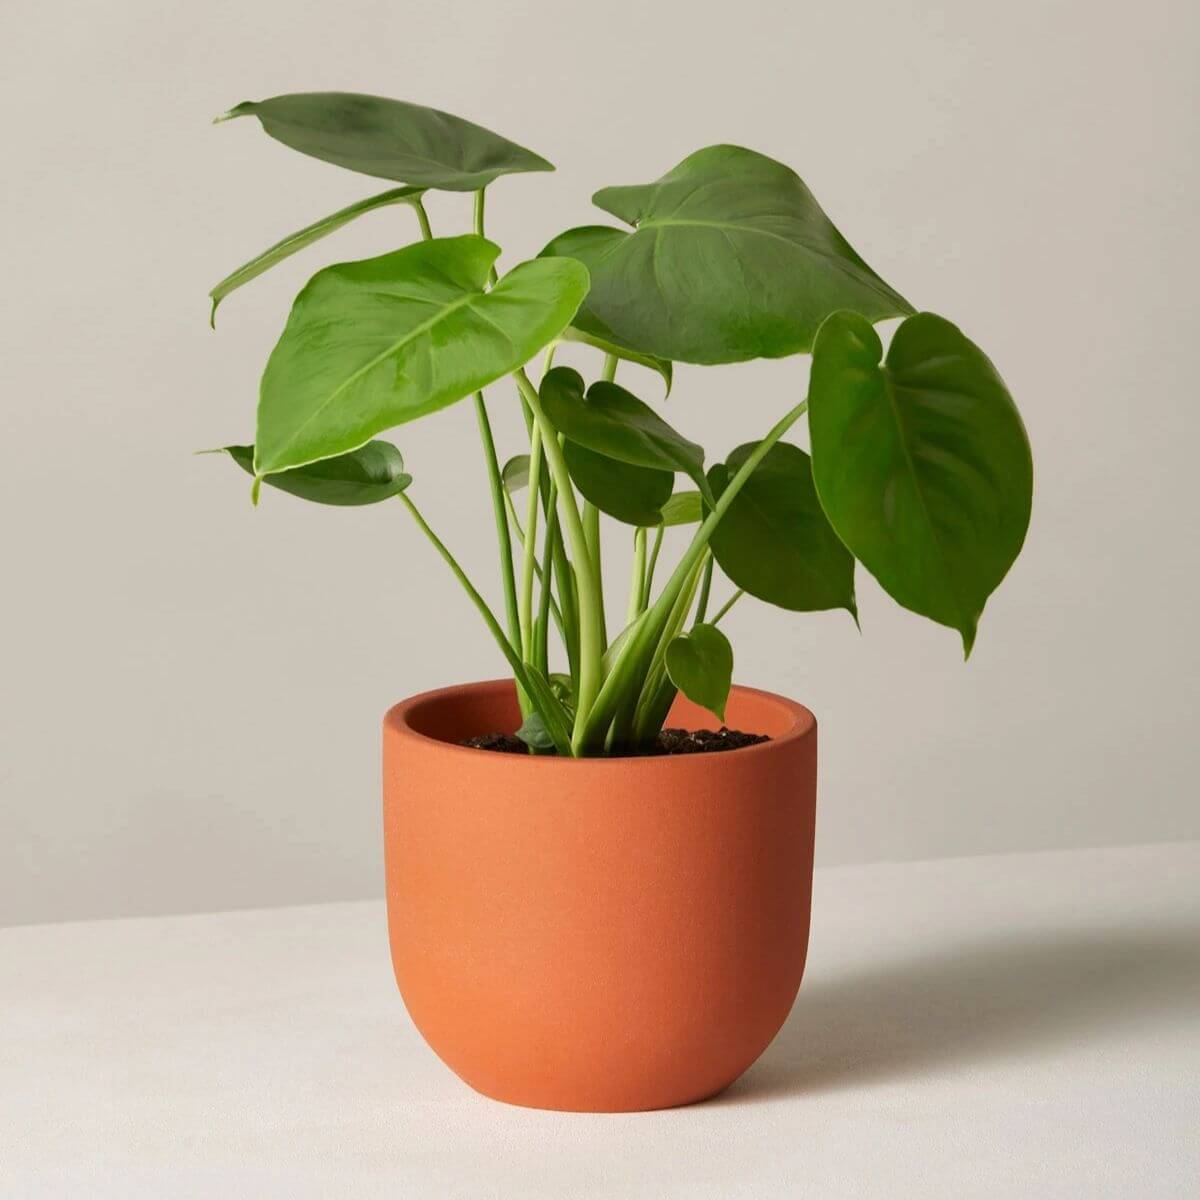 Monstera plant in a terracotta pot.